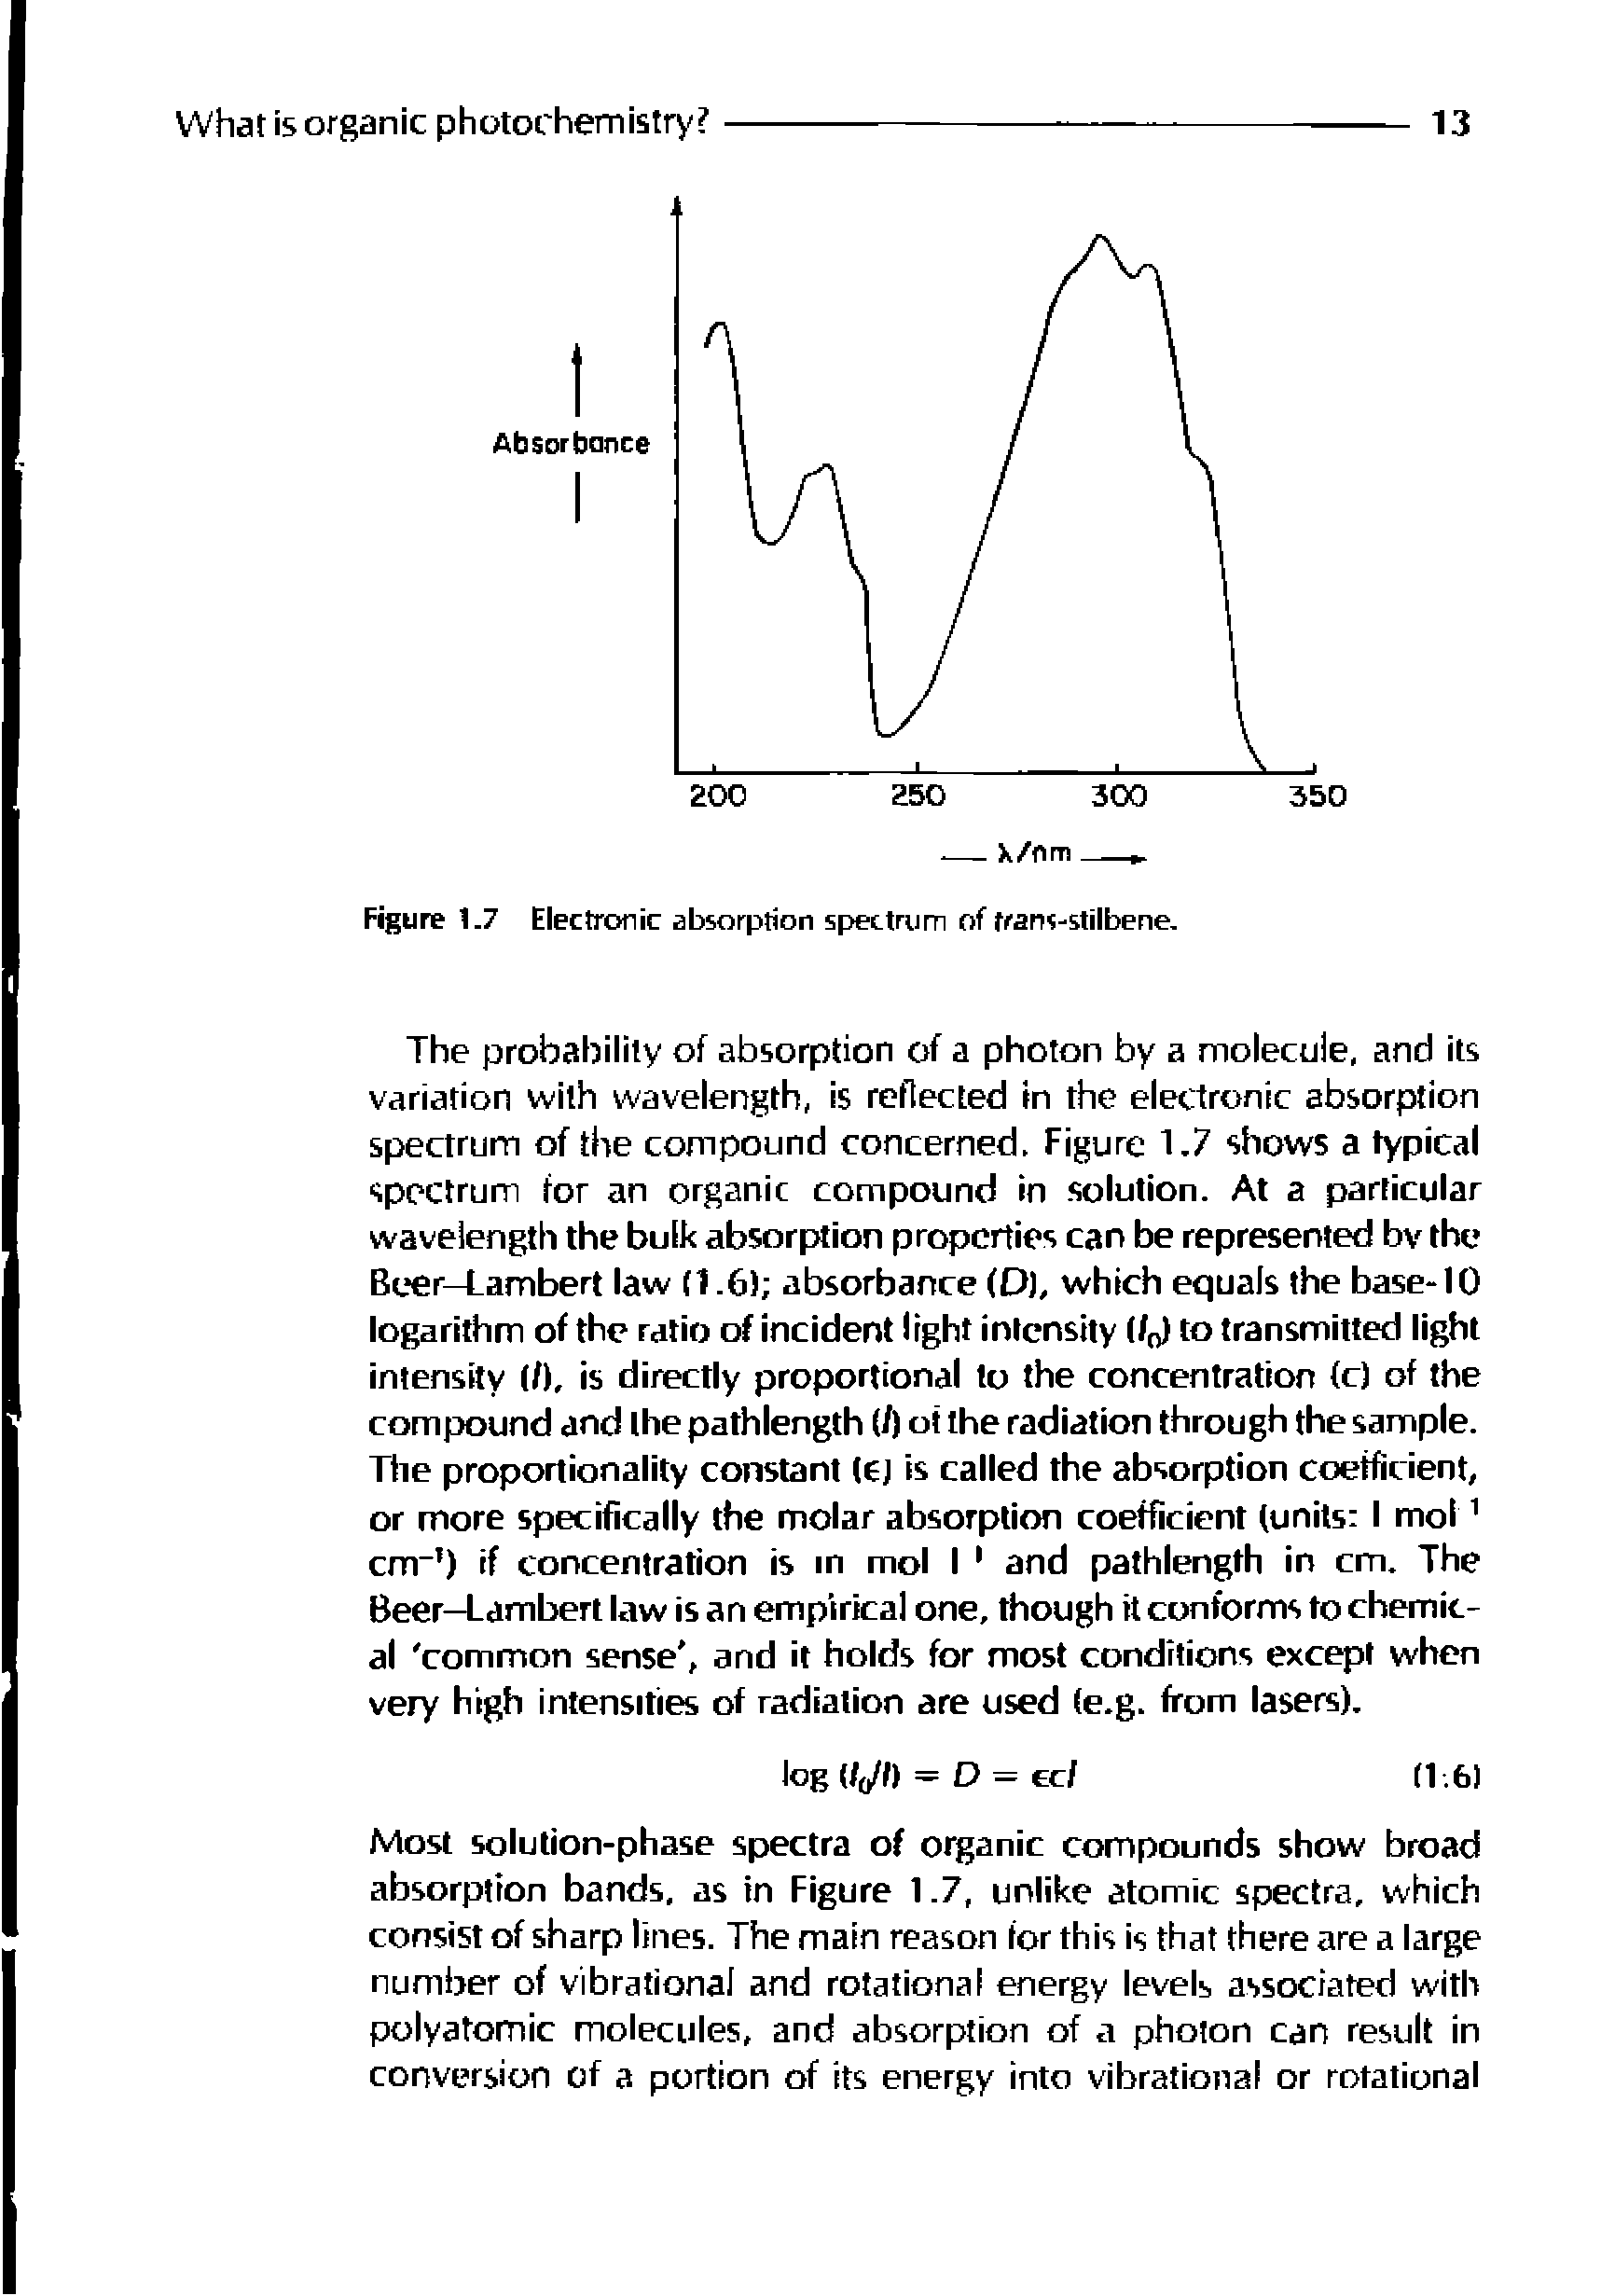 Figure 1.7 Electronic absorption spectrum of frans-stilbene.